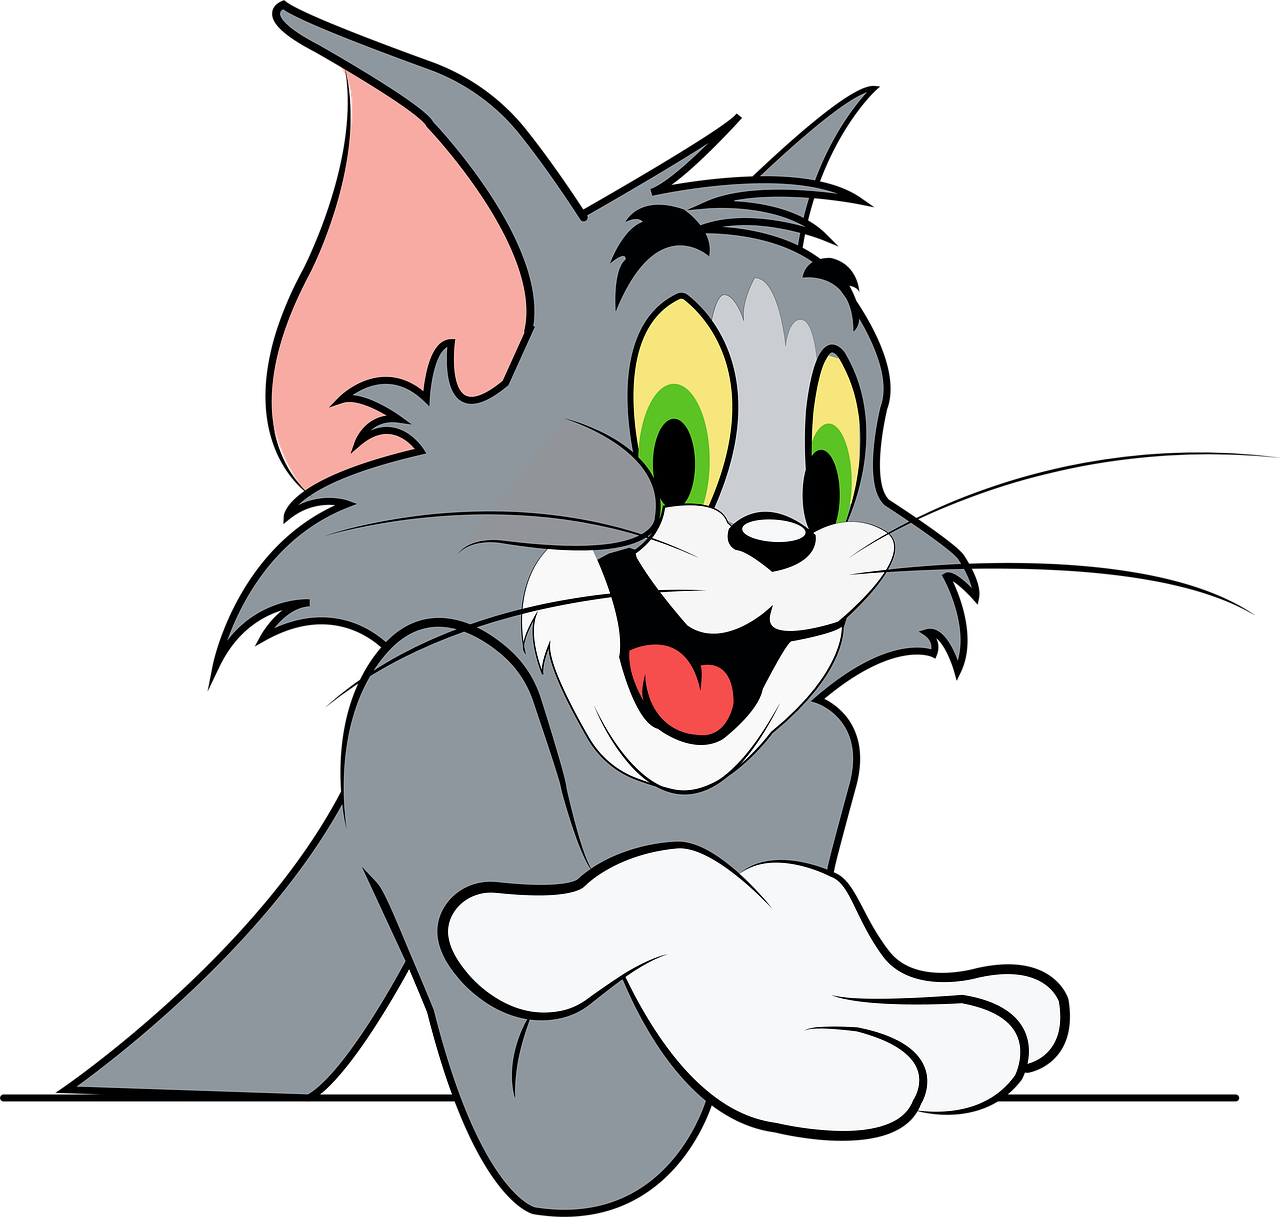 Tom and Jerry. Кот том и Джерри. Том и Джерри (Tom and Jerry) 1940.